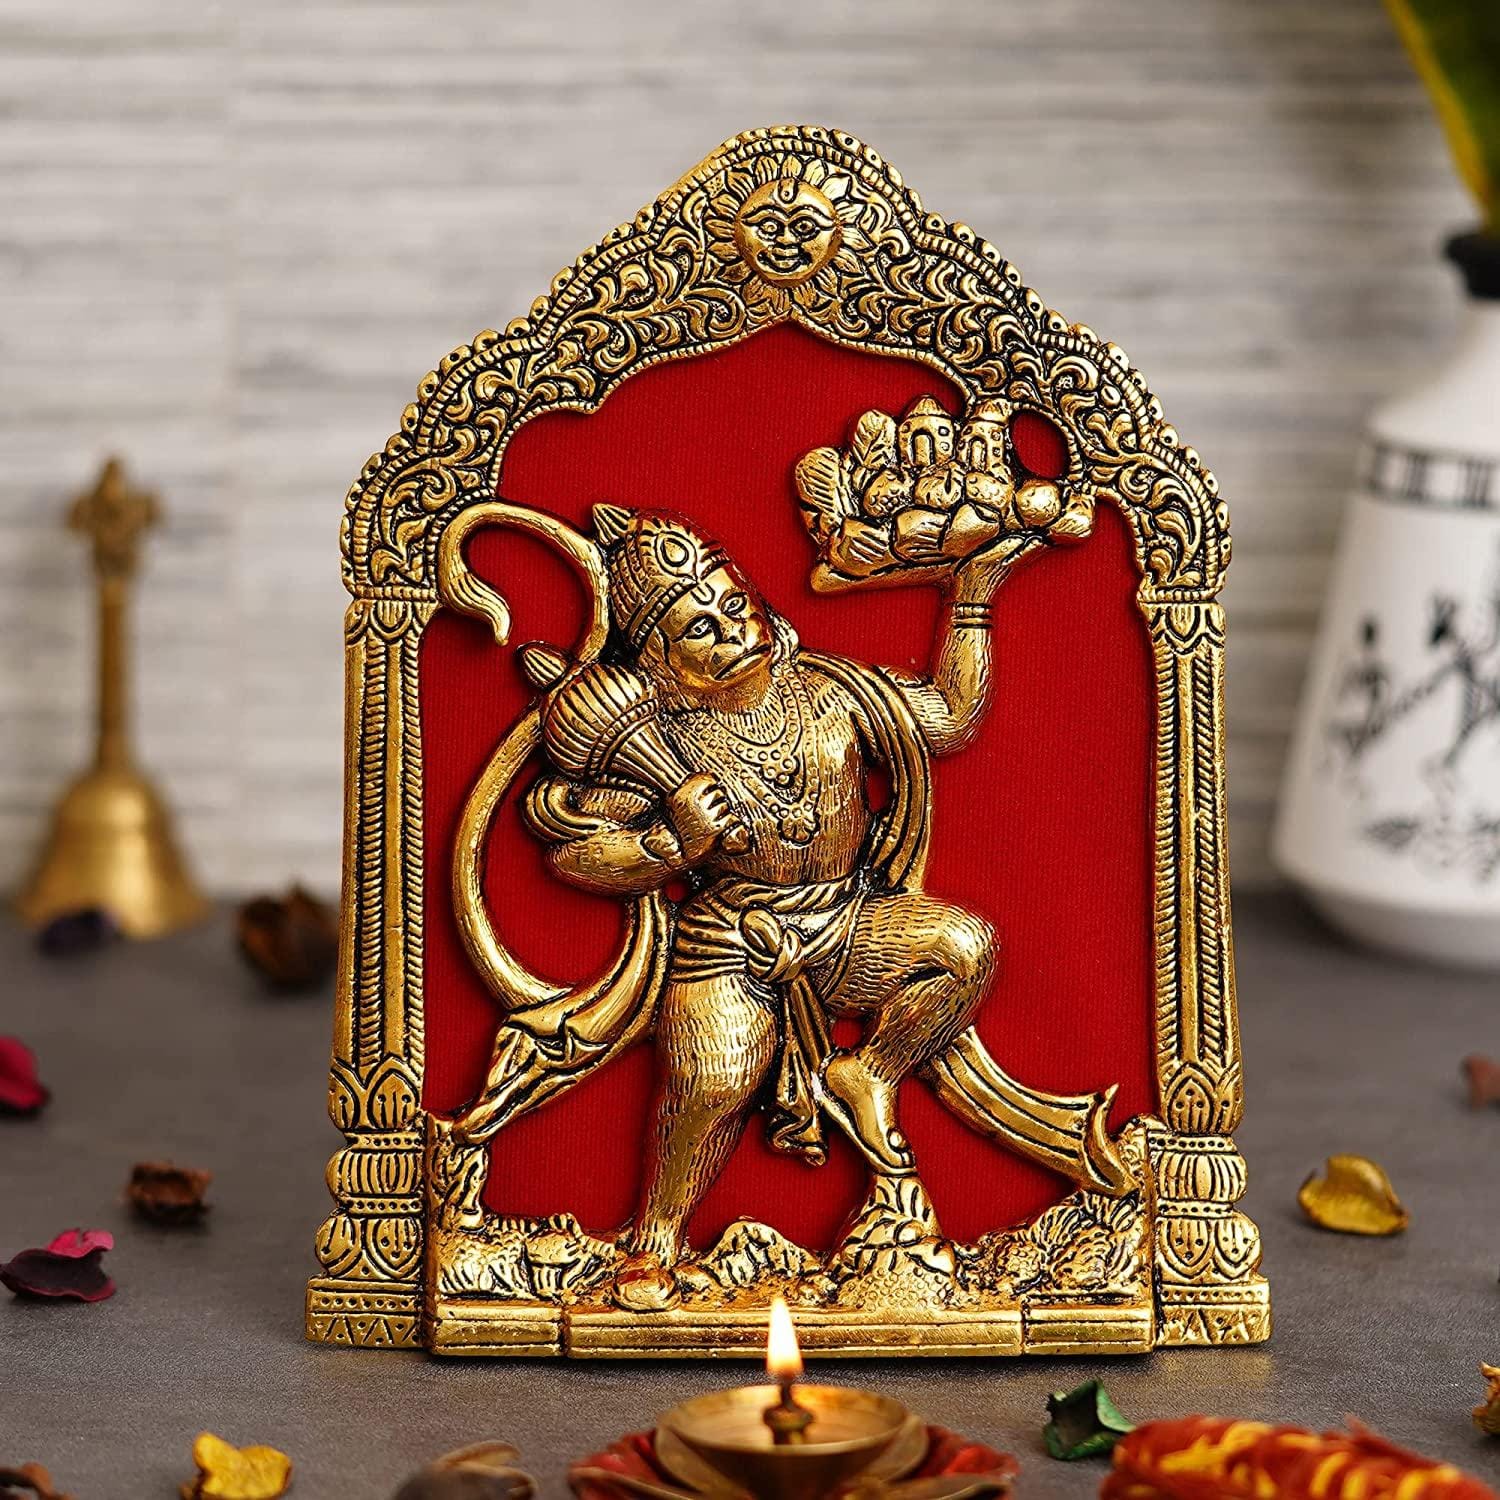 JaipurCrafts Metal Lord Hanuman Idol Statue for Home and Office Decor